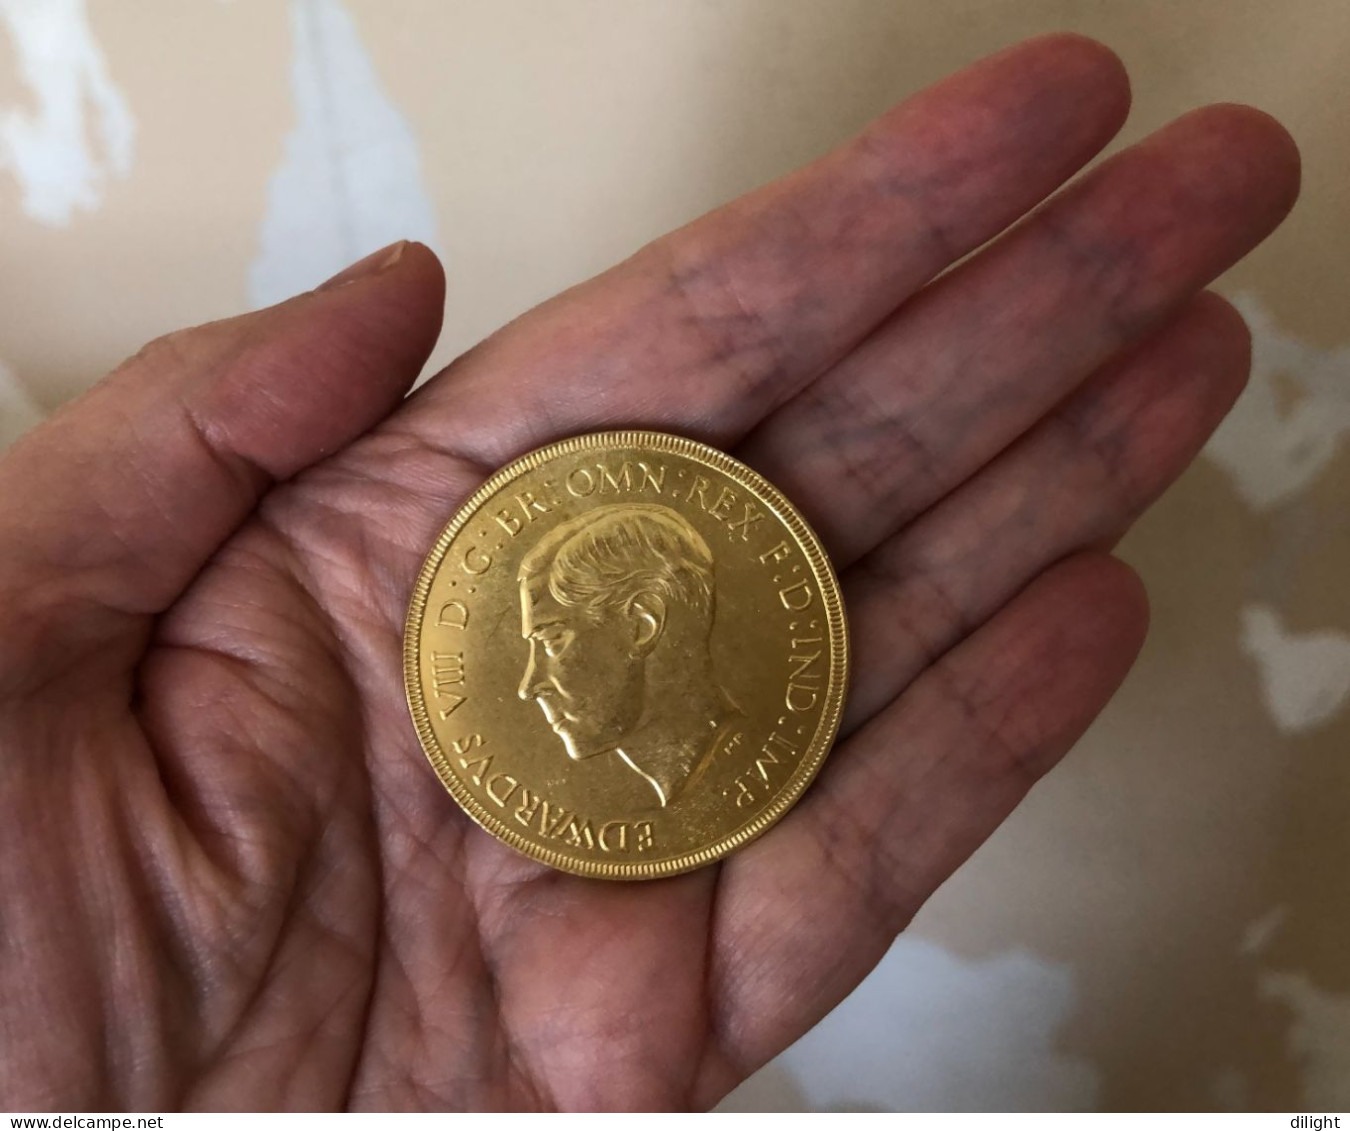 Coin 1937 King Edward VIII Of England (Wallis Simpson) =replica= FREE SHIPPING - Comercio Exterior, Ensayos, Contramarcas Y Acuñaciones